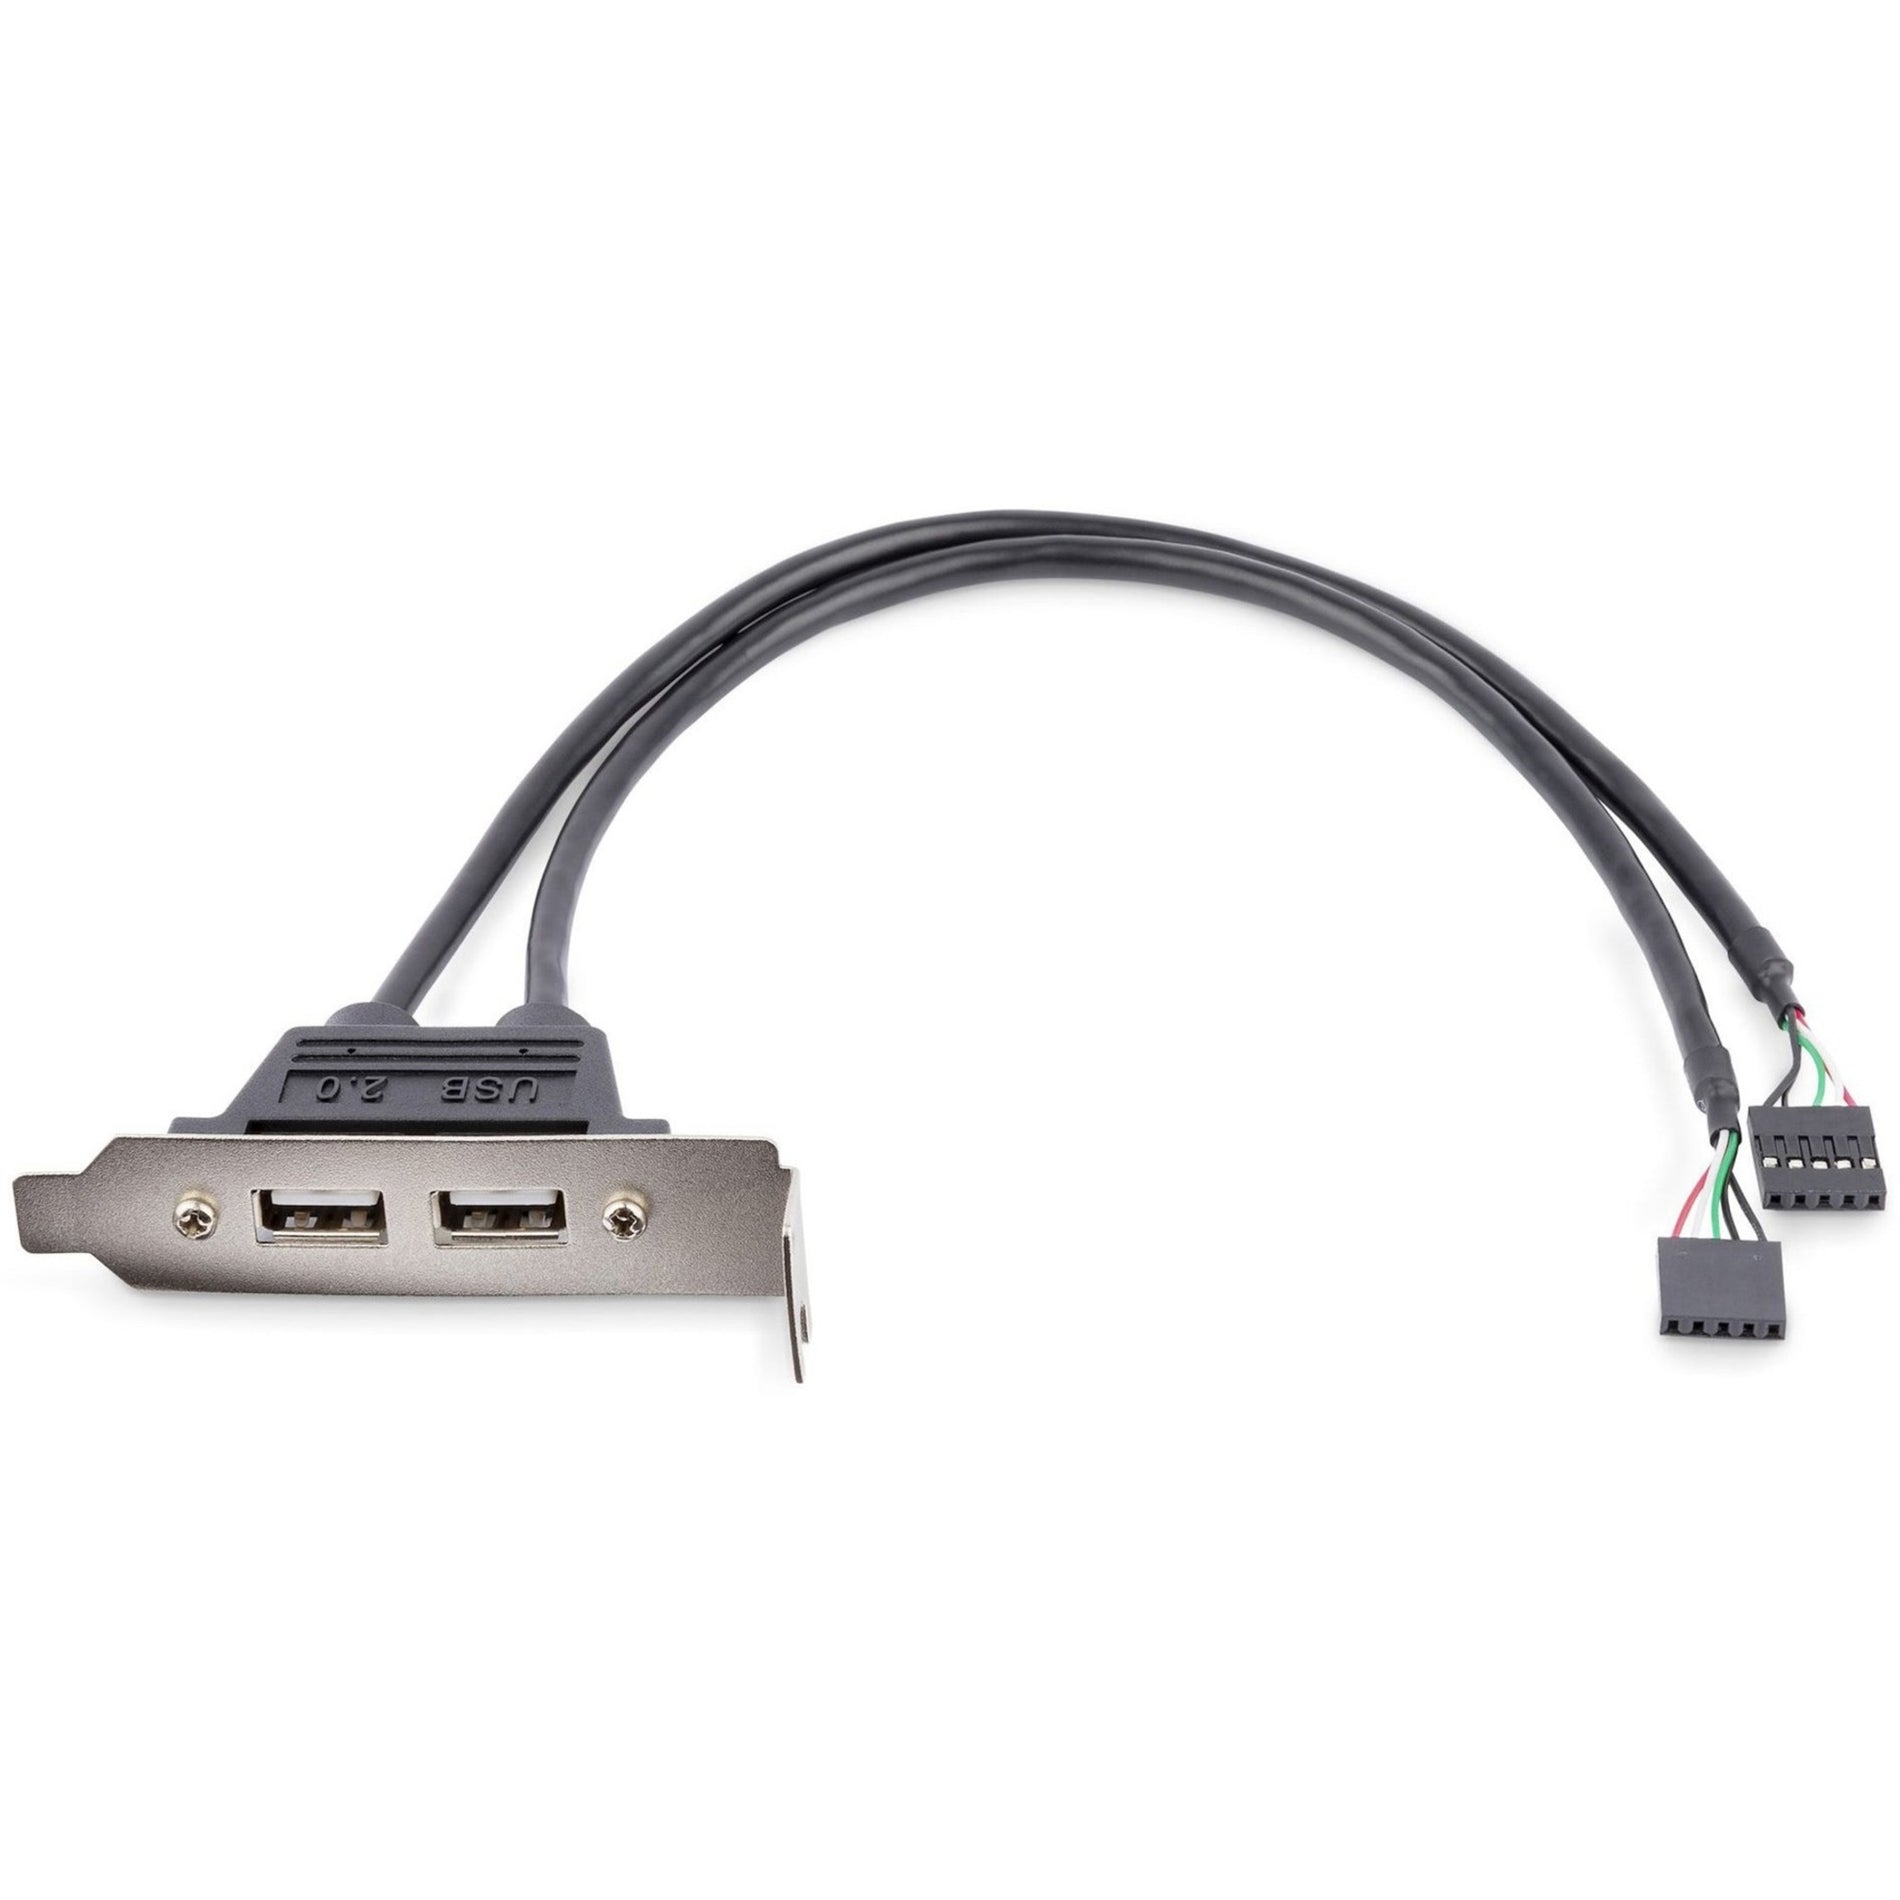 StarTech.com USBPLATELP 2 Port USB A Female Low Profile Slot Plate Adapter, Data Transfer Adapter